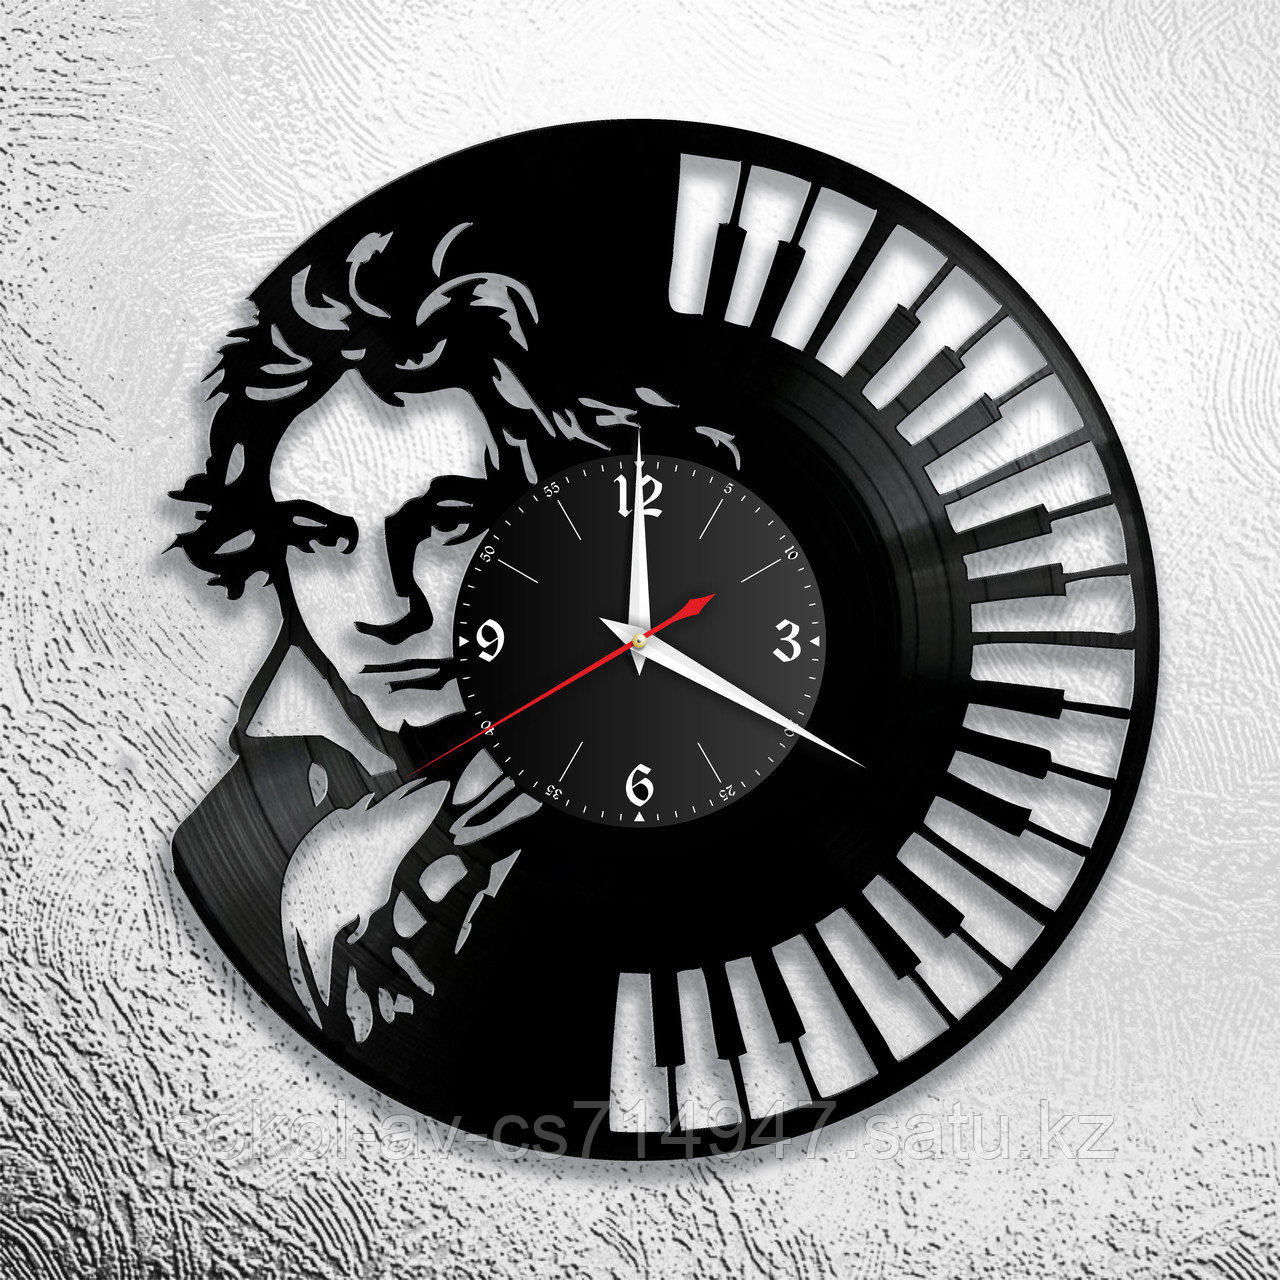 Настенные часы из пластинки, Людвиг ван Бетховен, подарок музыкантам, композиторам, фанатам, любителям, 0823